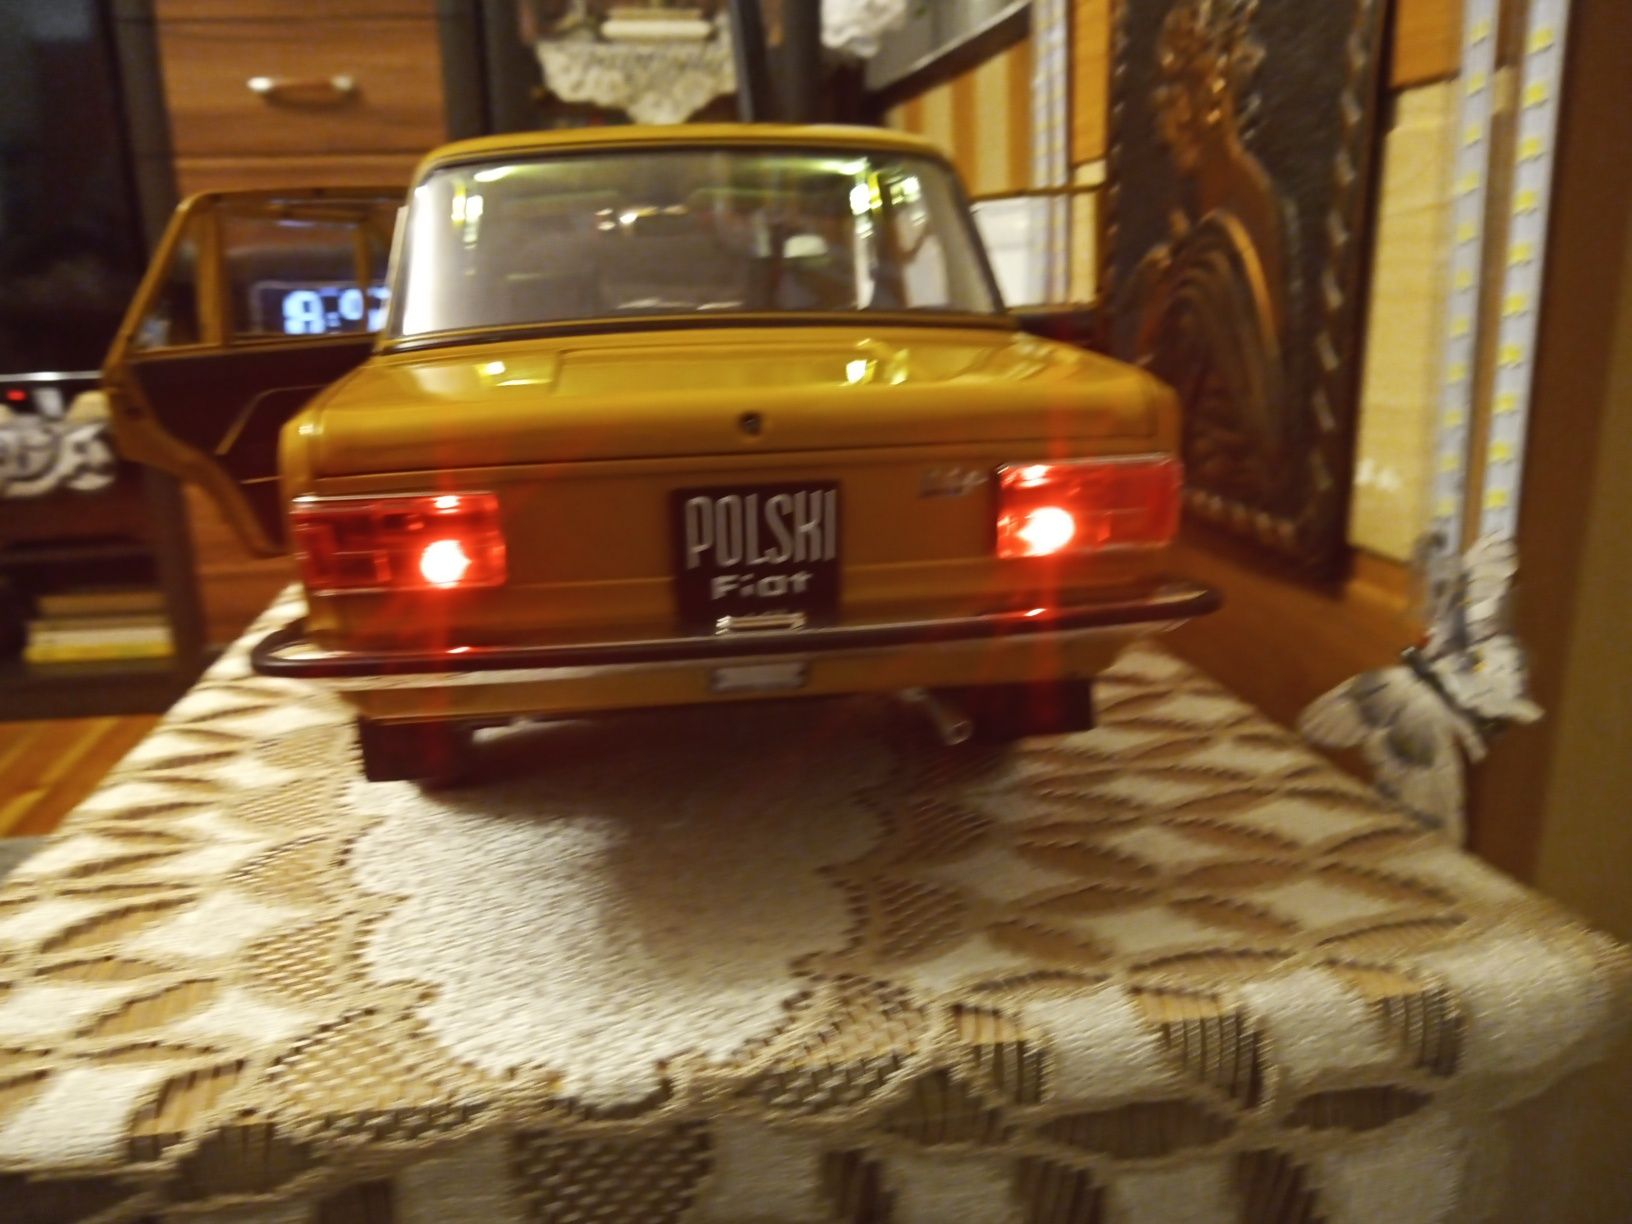 Fiat 125 P kolrkcja Deagostini 1:8